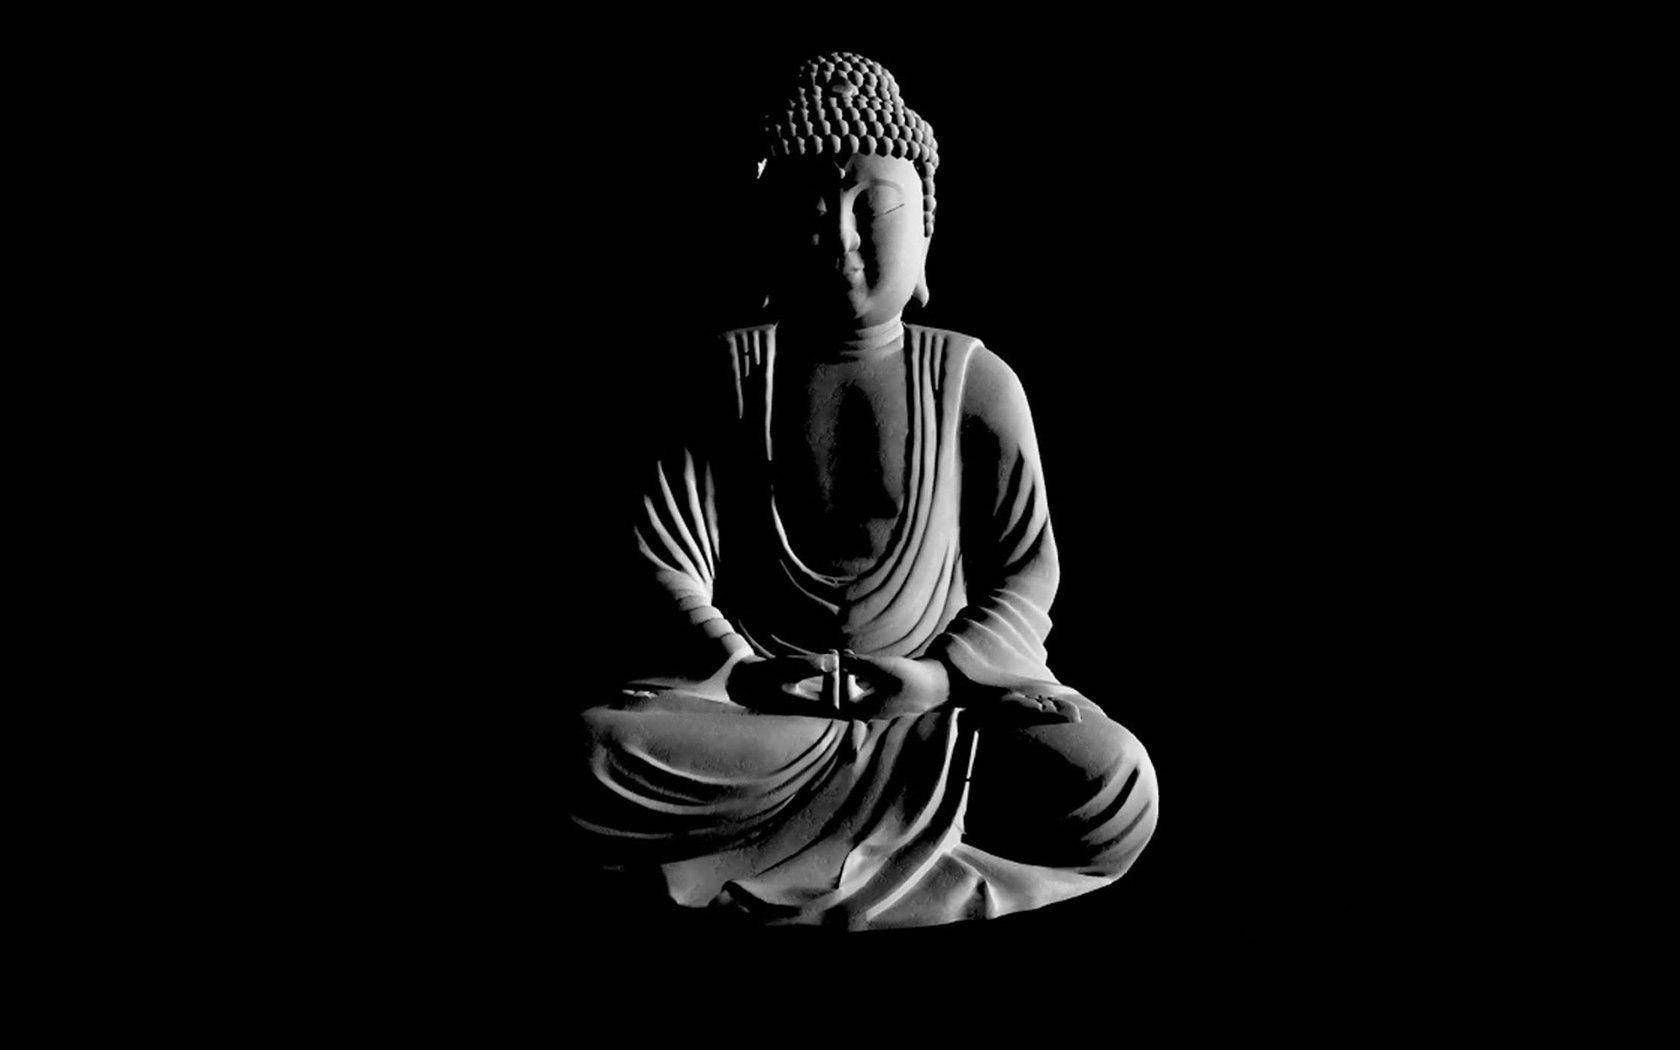  Buddhismus Hintergrundbild 1680x1050. Free Buddha 3D Wallpaper Downloads, Buddha 3D Wallpaper for FREE